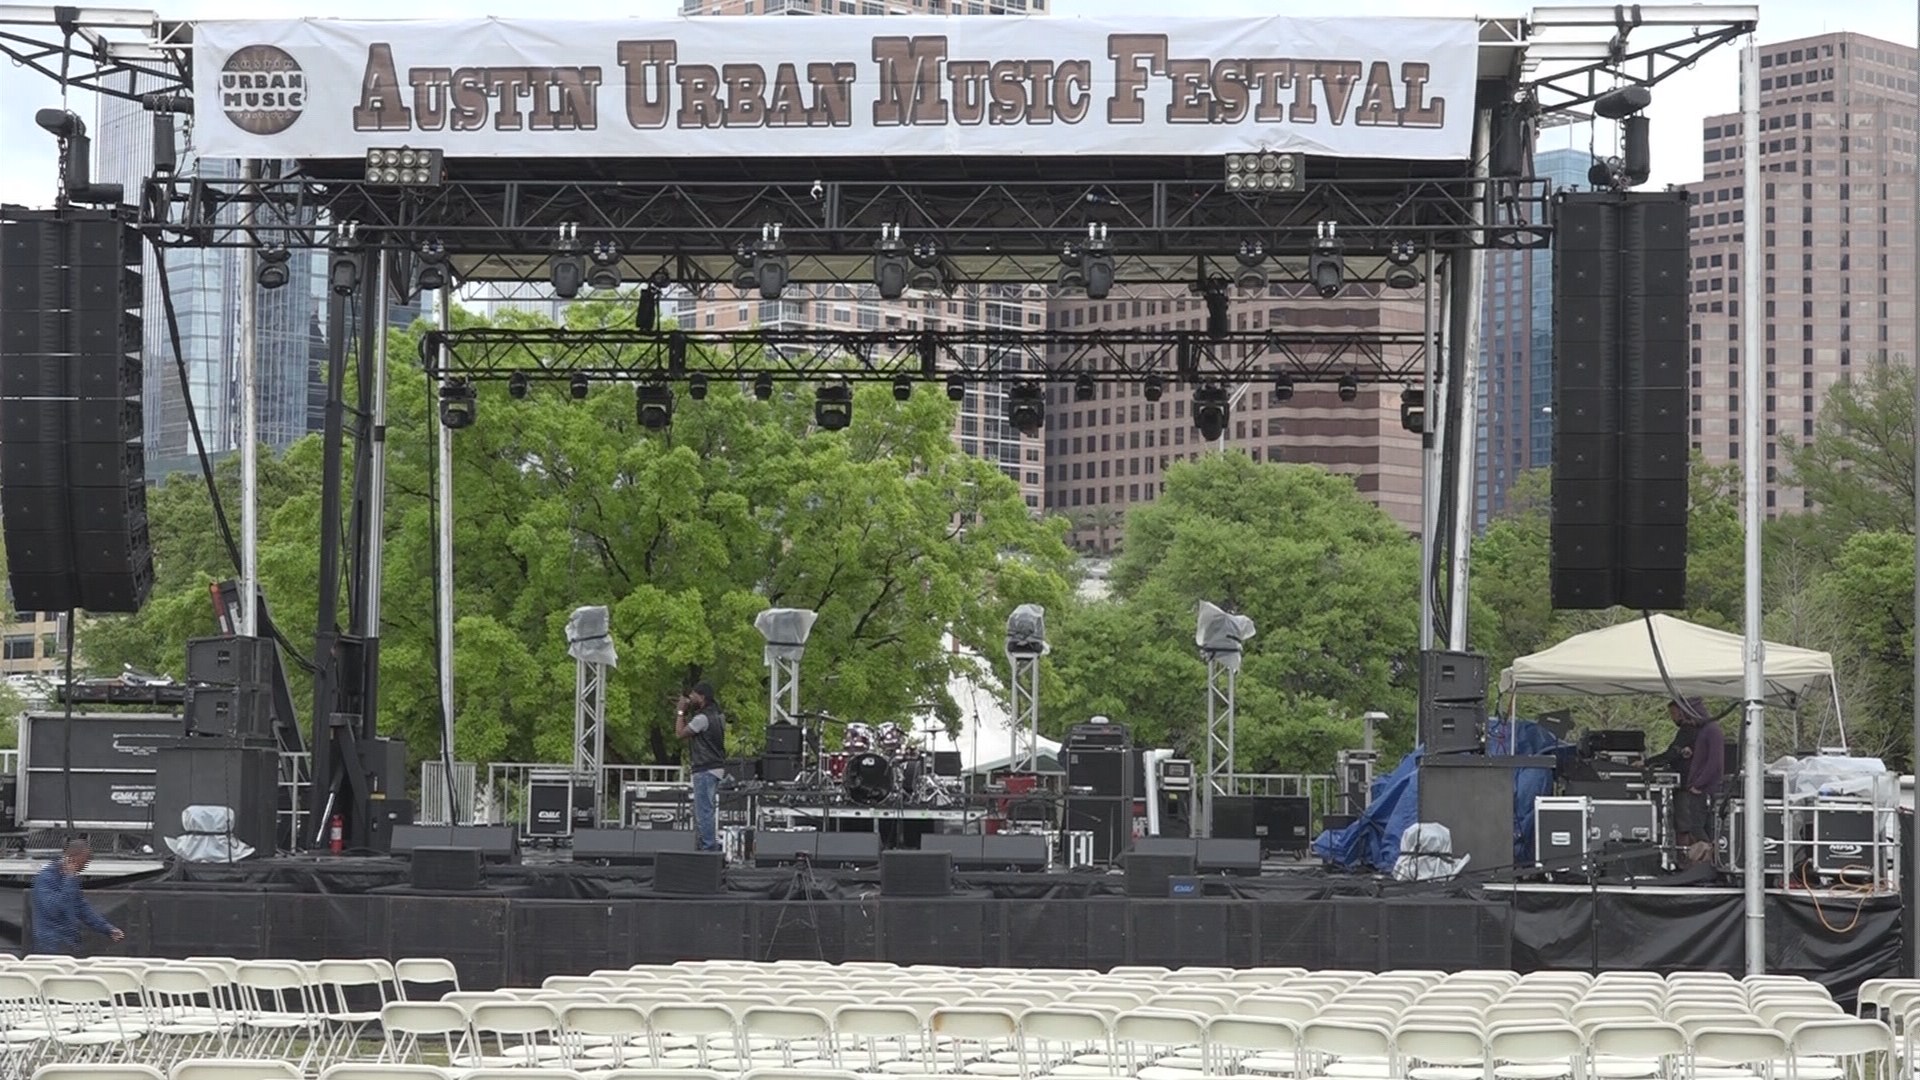 Urban Music Festival, Texas Relays in Austin this weekend